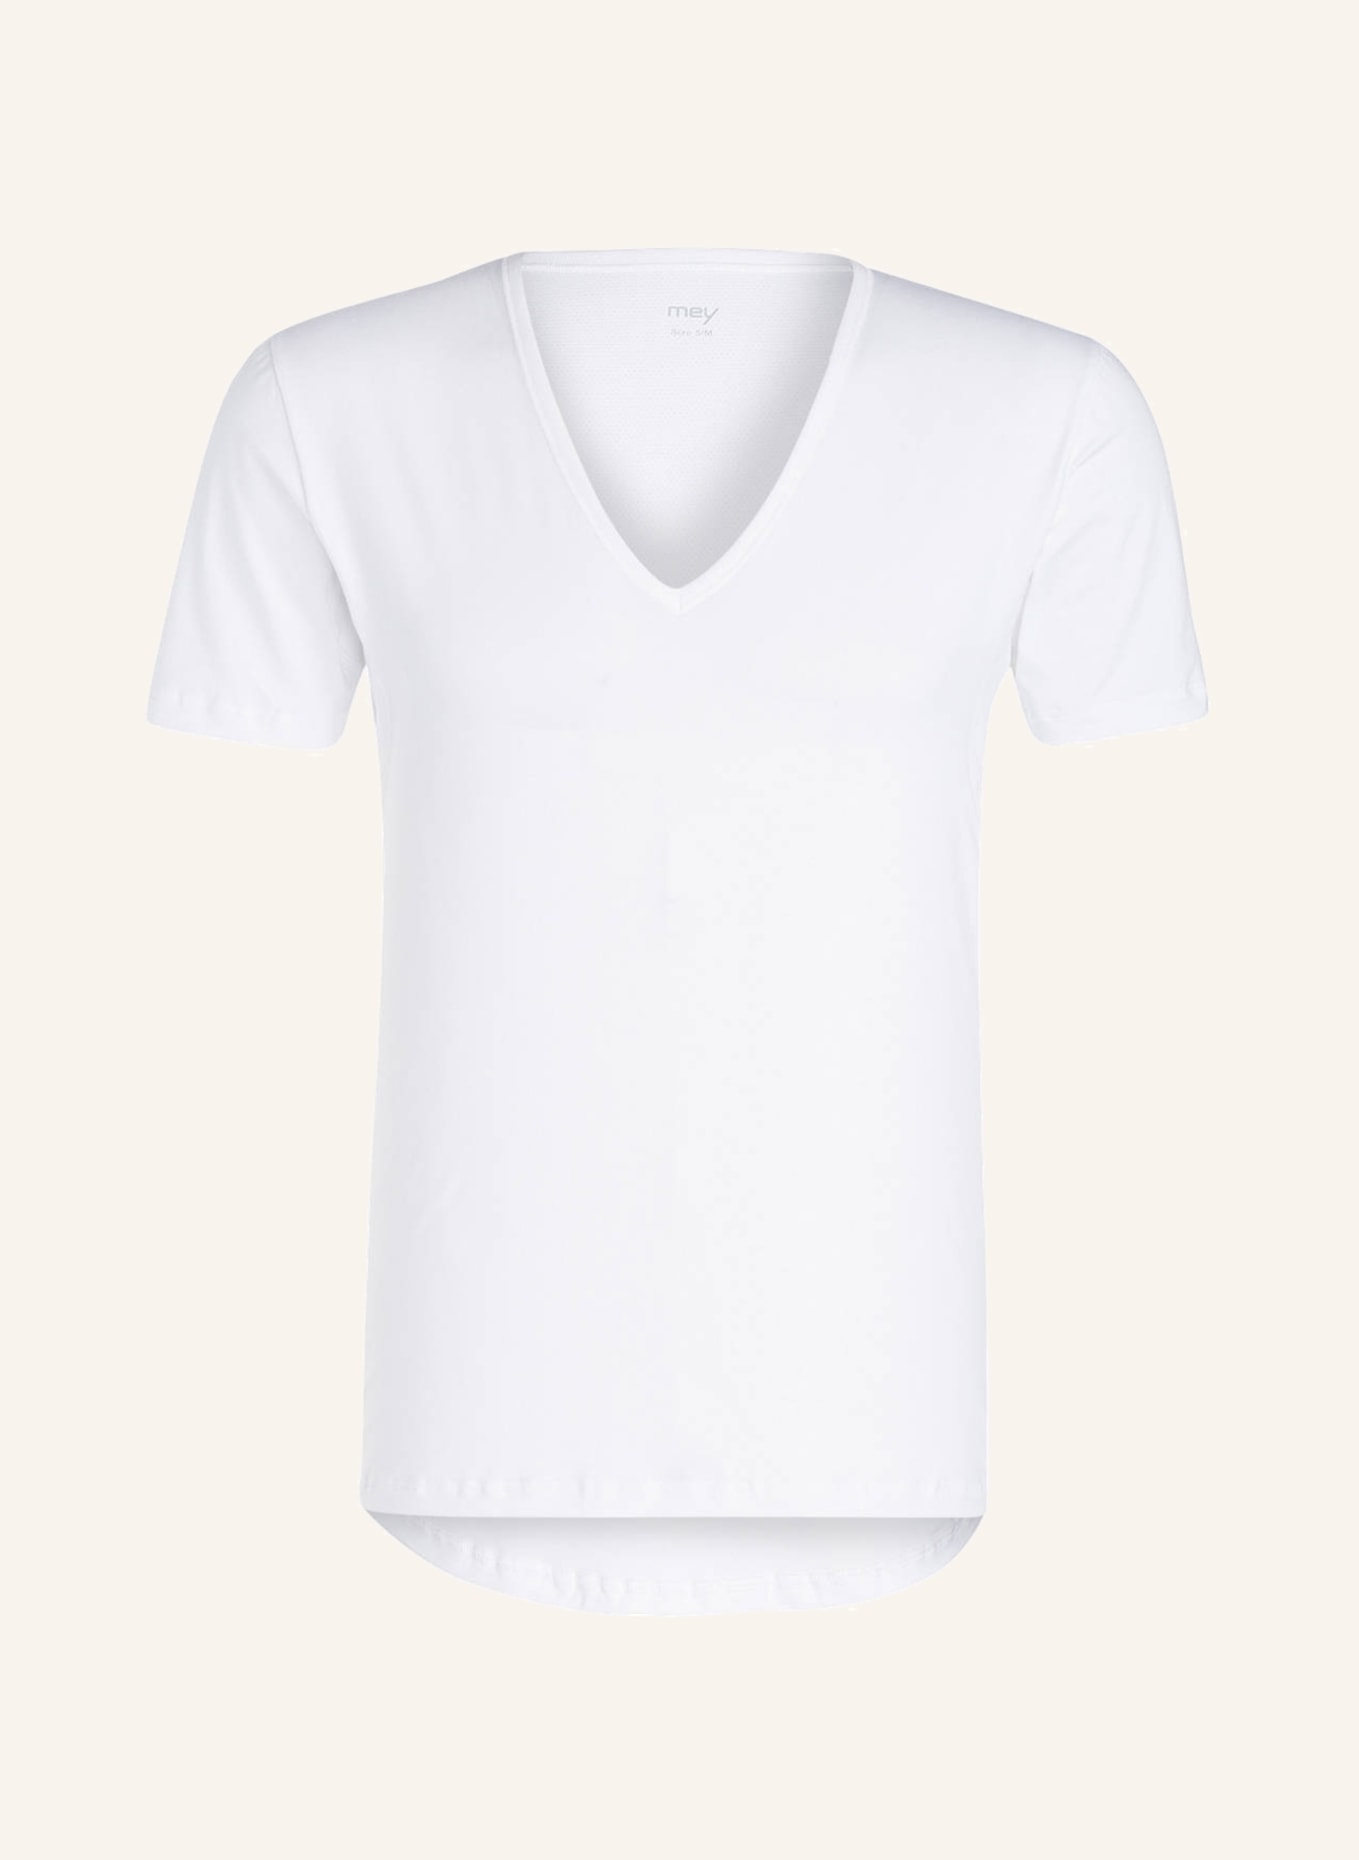 mey V-shirt series DRY COTTON, Color: WHITE (Image 1)